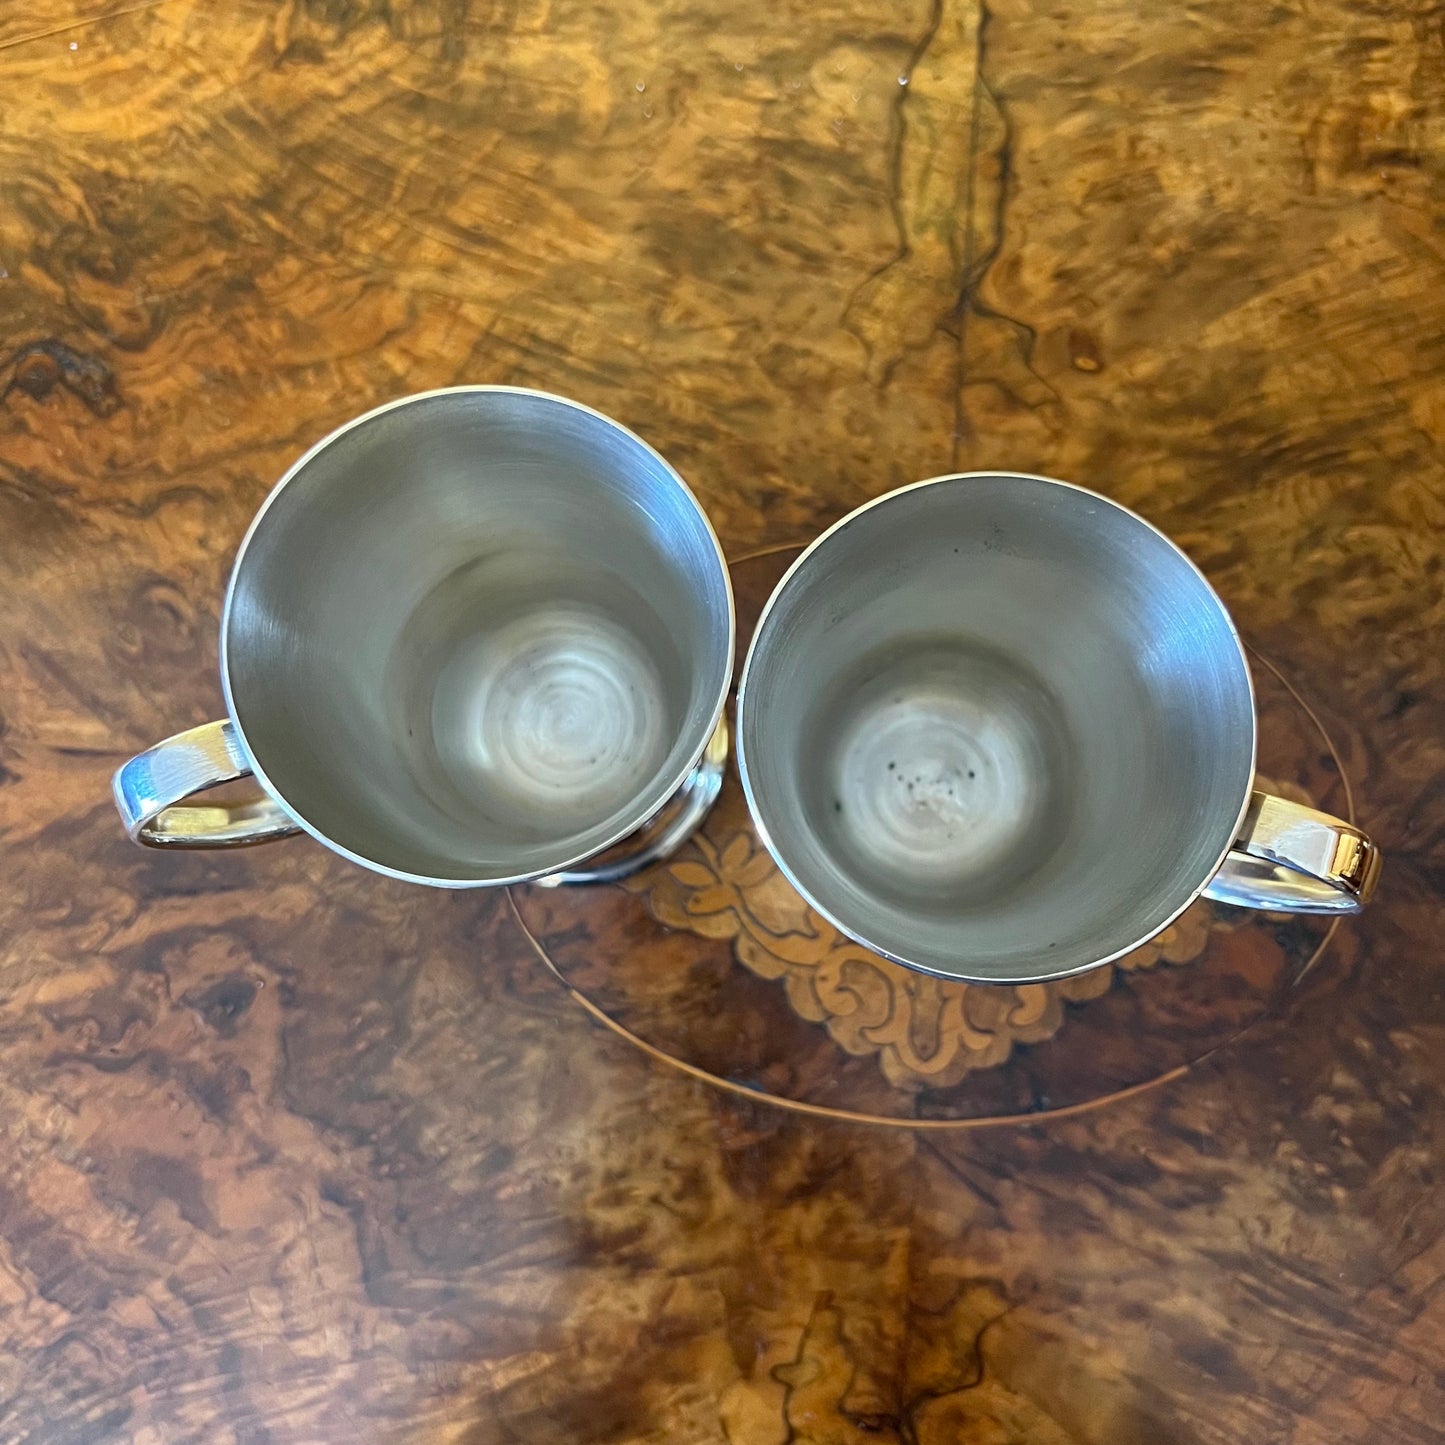 Farmer's Silver Plated Mugs Pair